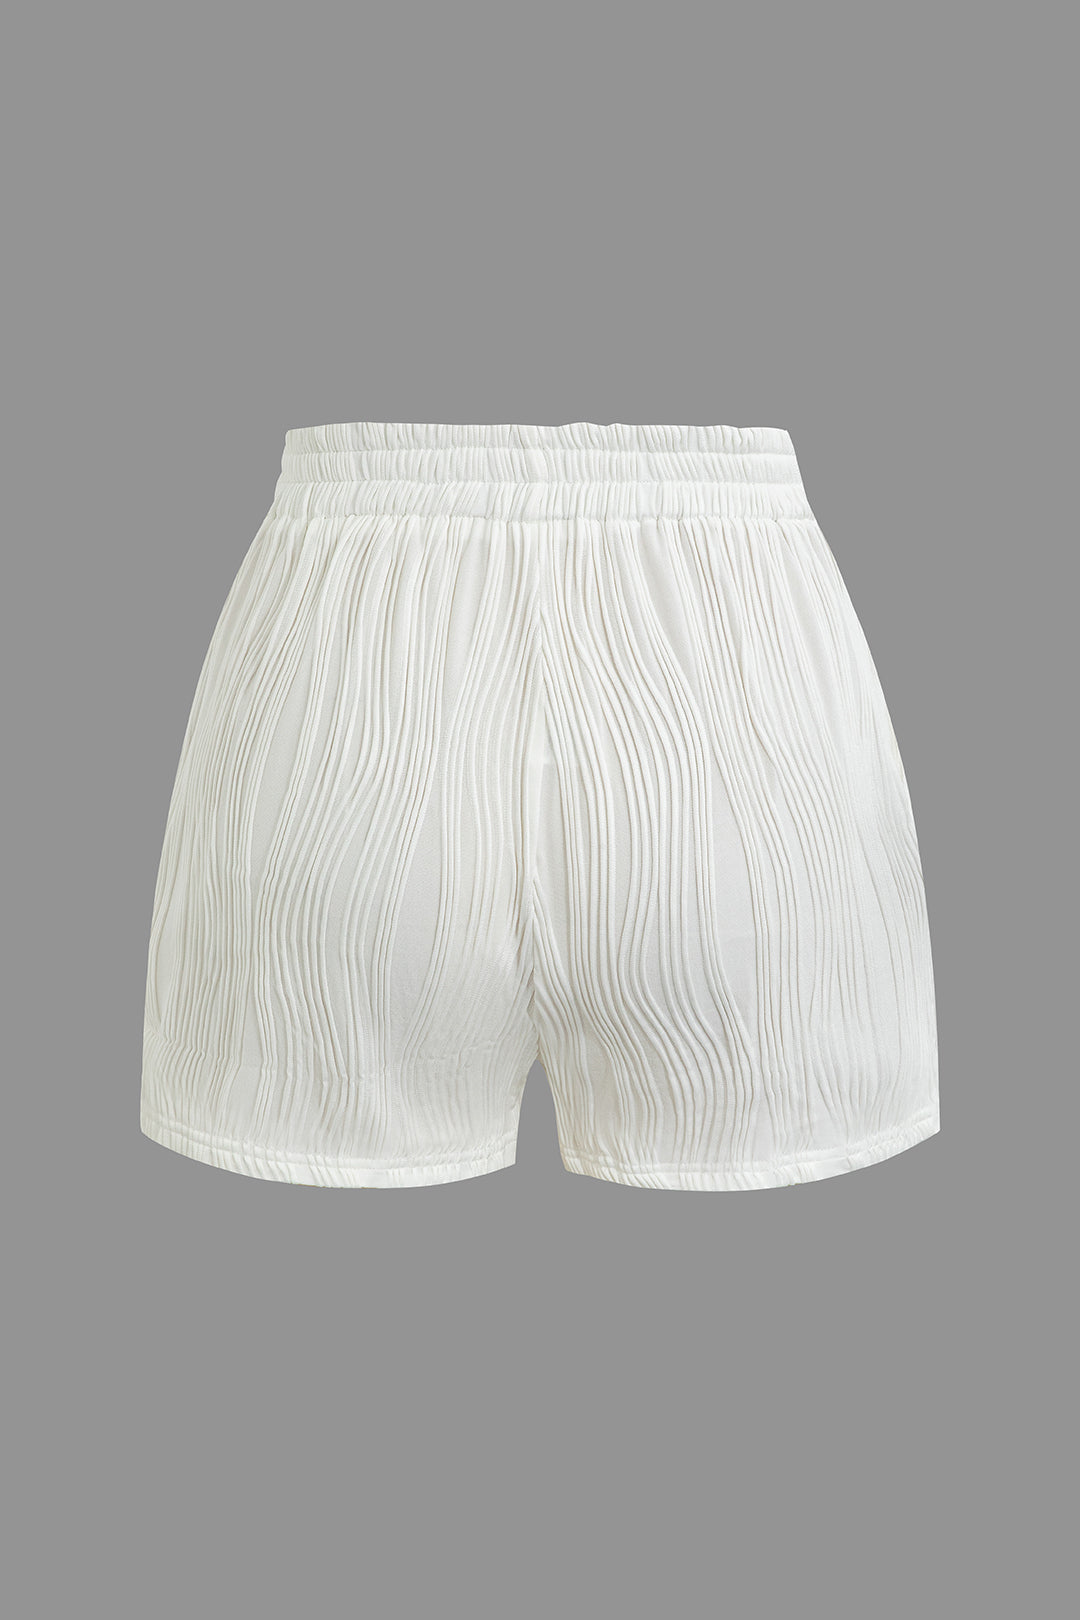 Textured Sleeveless Crop Top And Drawstring Shorts Set